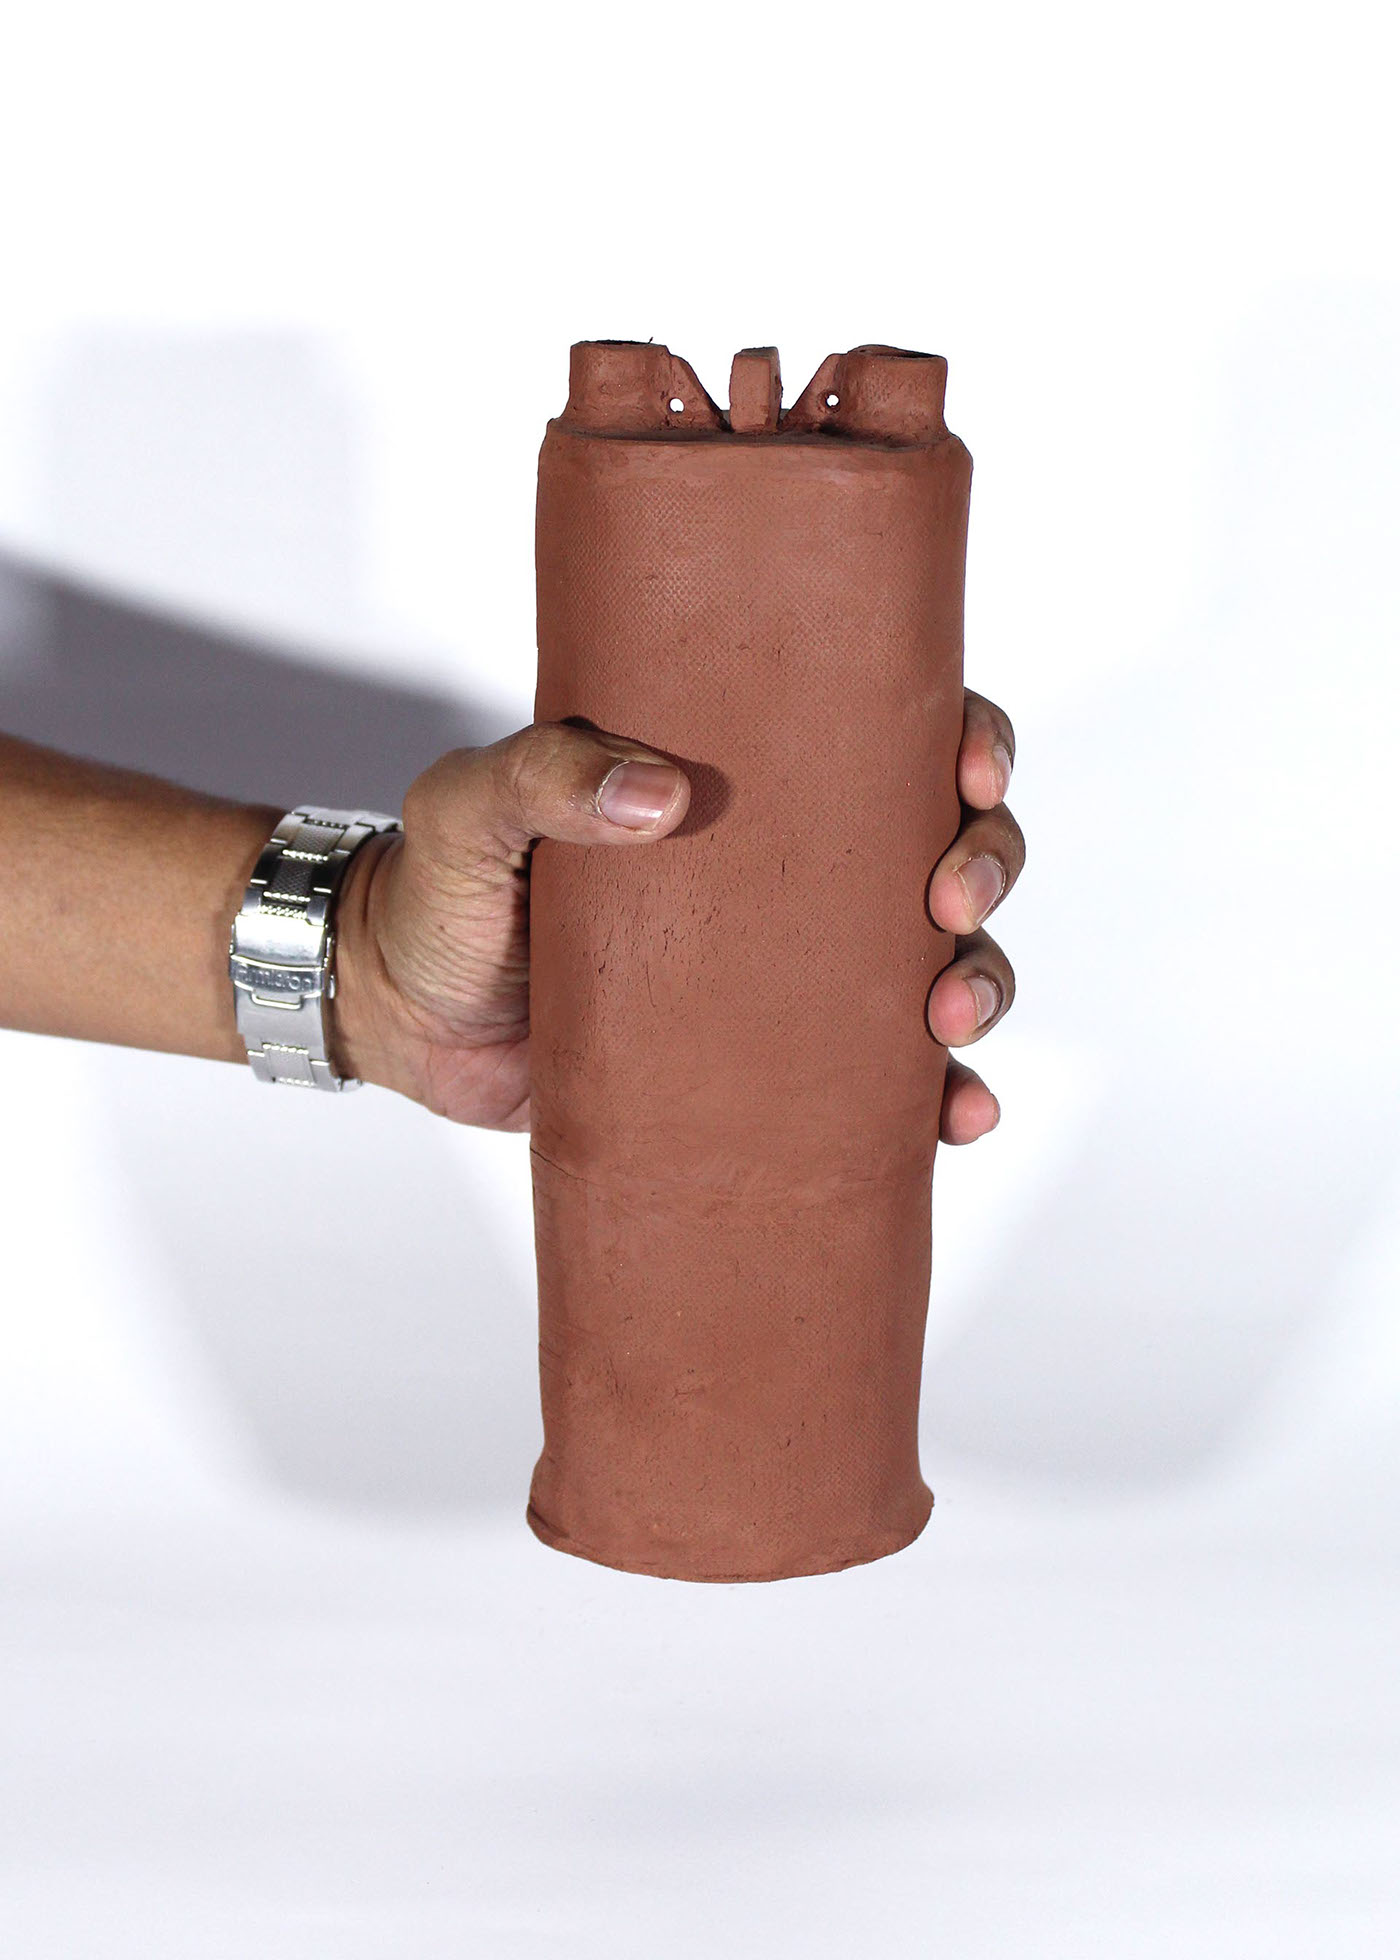 terracotta clay firing natural material hand made coil